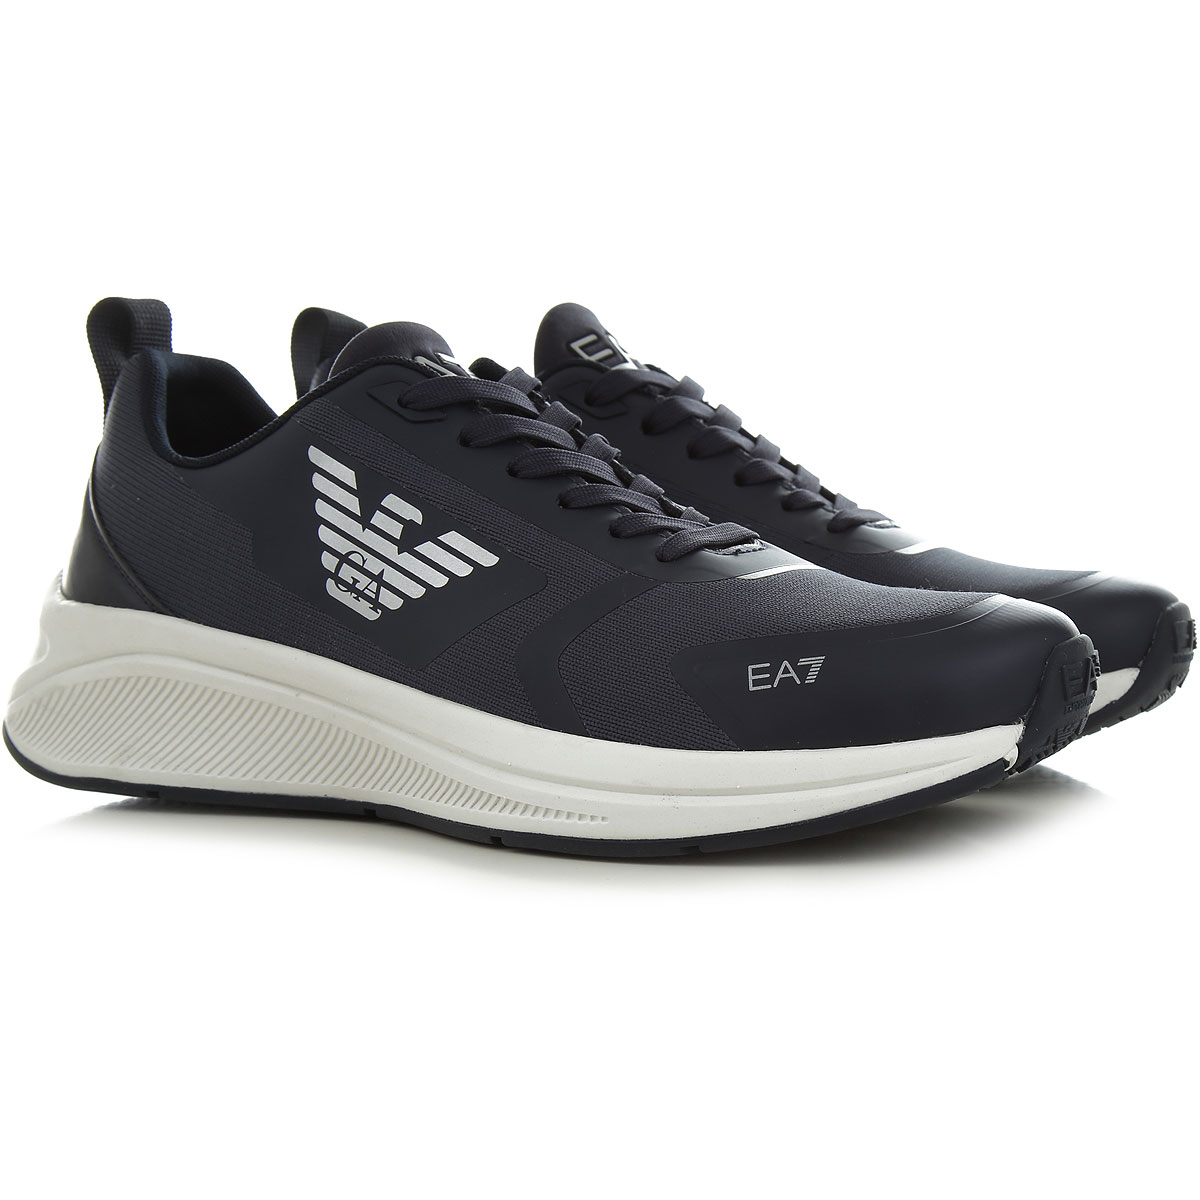 Mens Shoes Emporio Armani, Style code: x8x126-xk304-r370